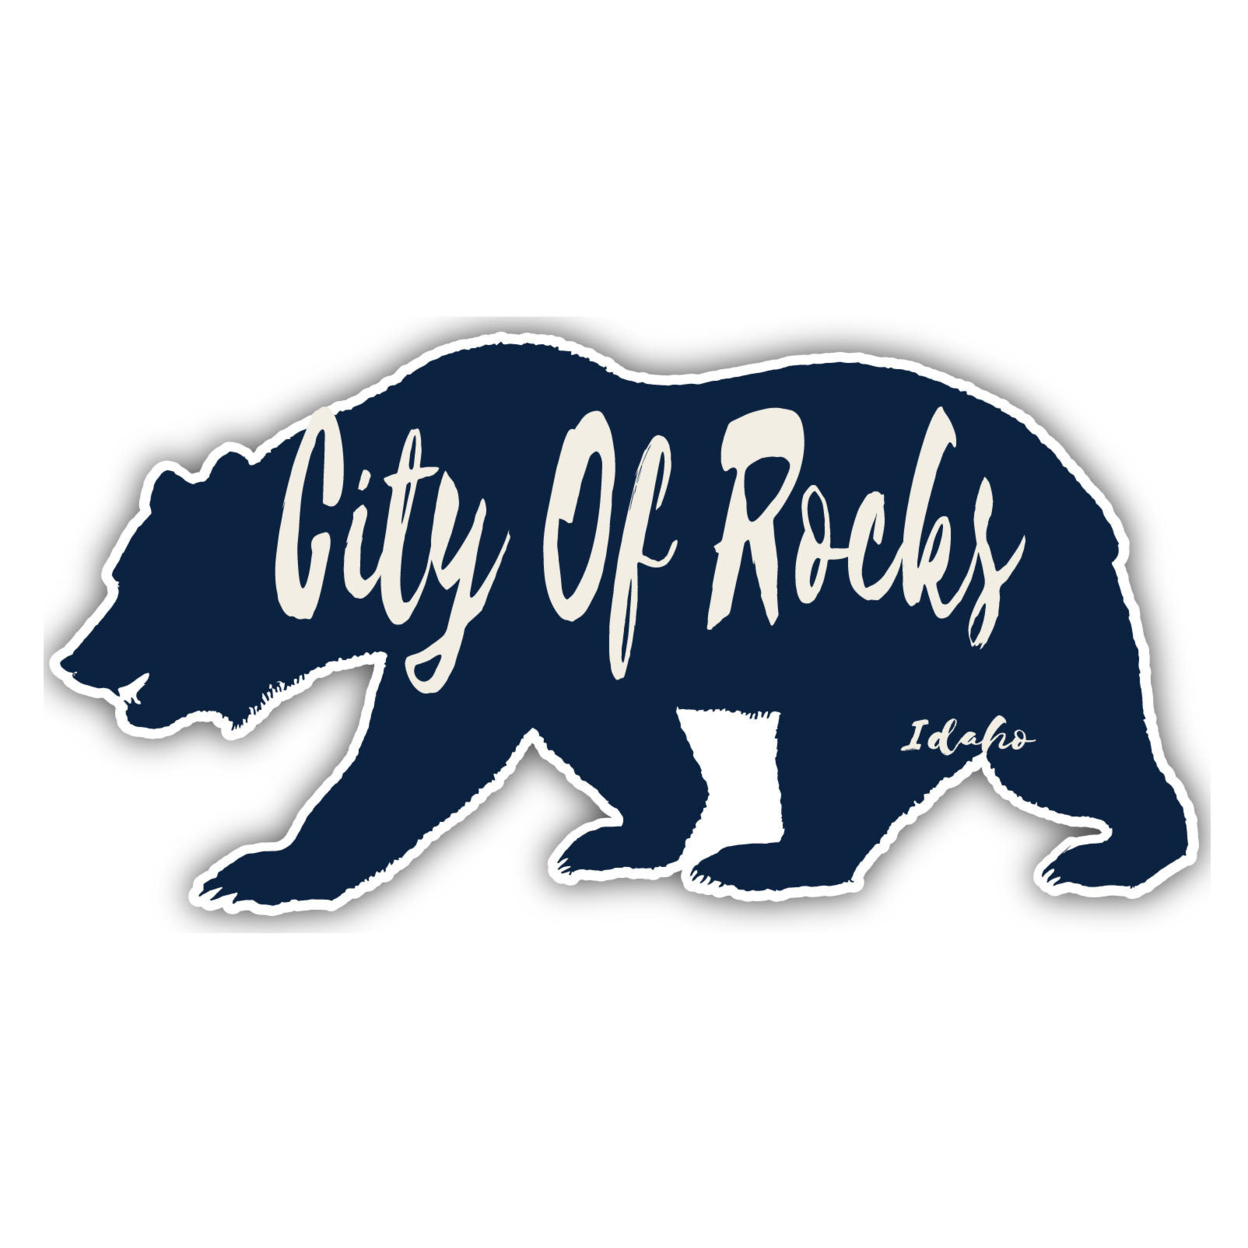 City Of Rocks Idaho Souvenir Decorative Stickers (Choose Theme And Size) - Single Unit, 8-Inch, Tent